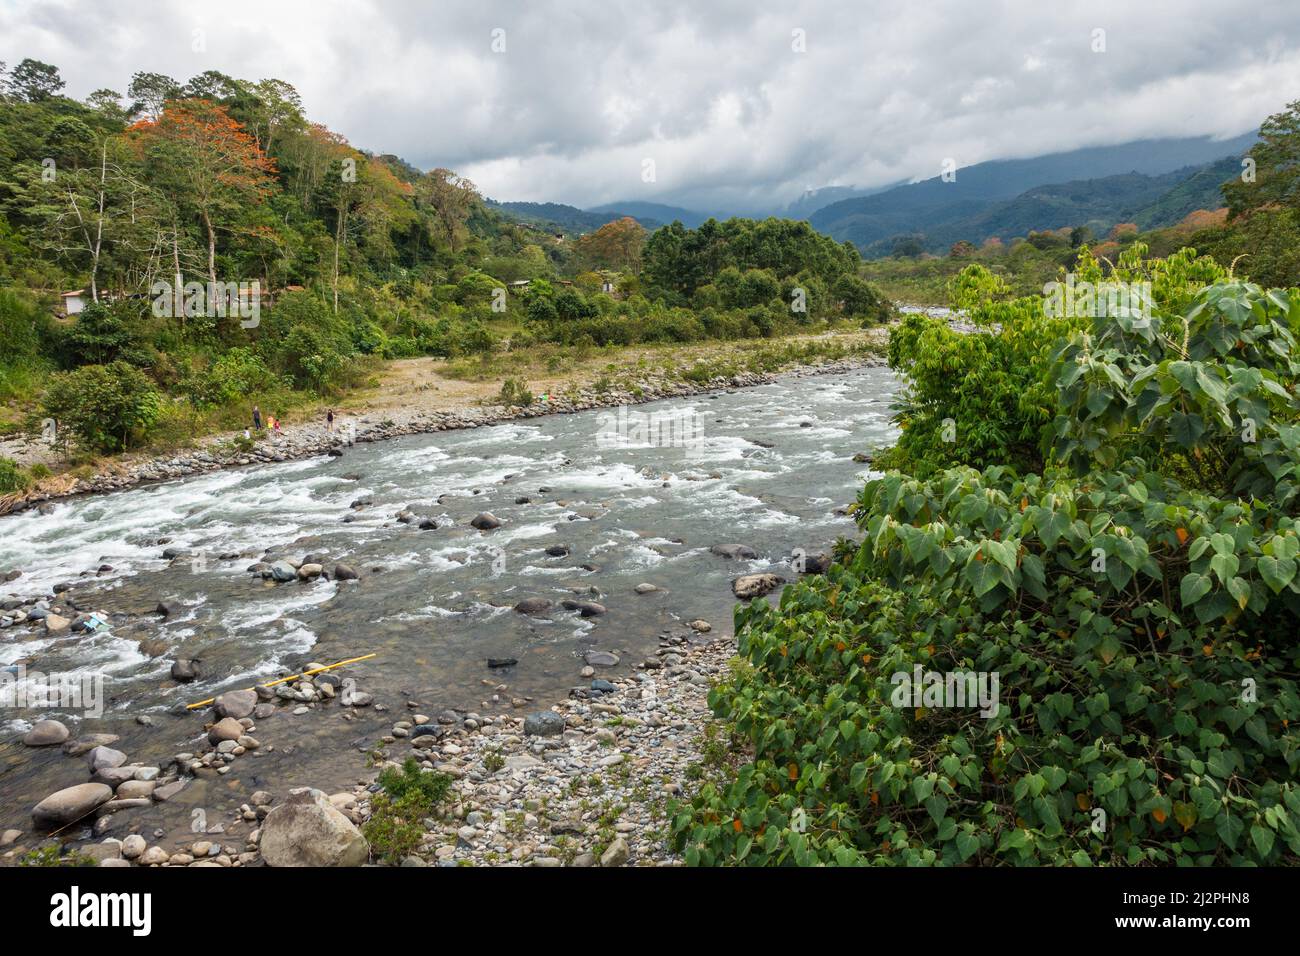 A river flows through the scenic Orosi Valley, Costa Rica. Stock Photo